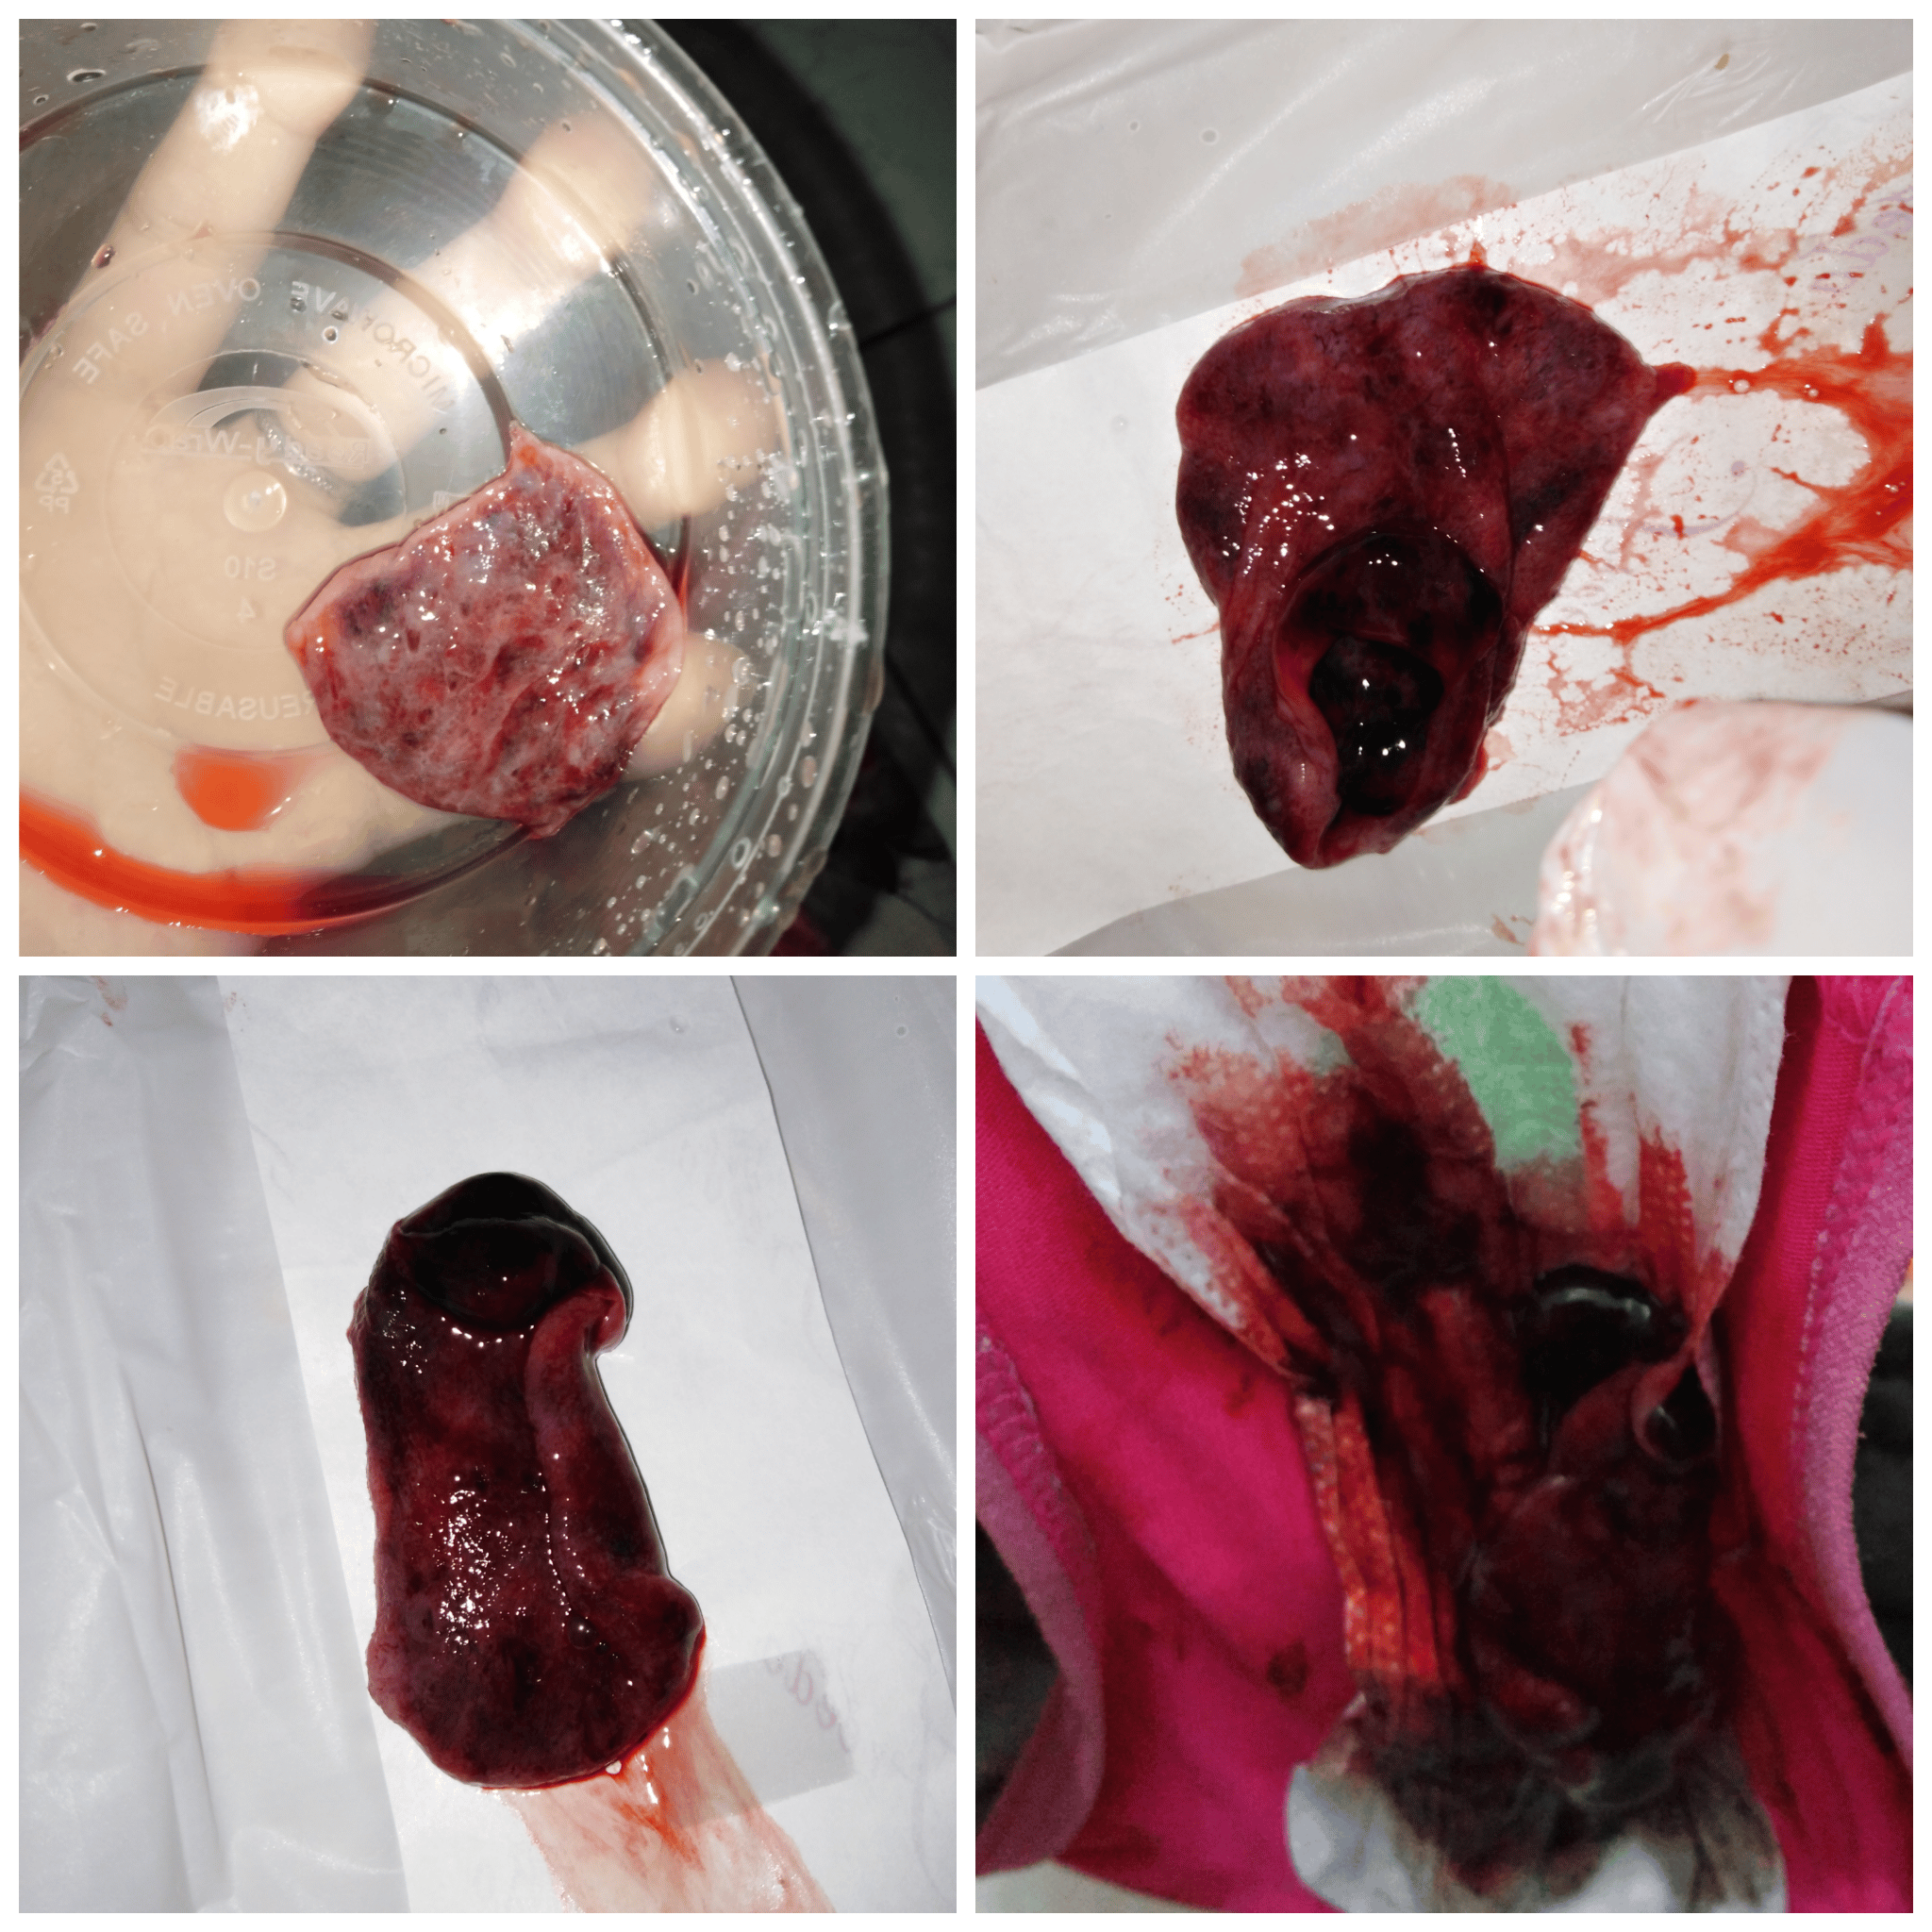 Implantation Bleeding Or Period : Implantation Bleeding